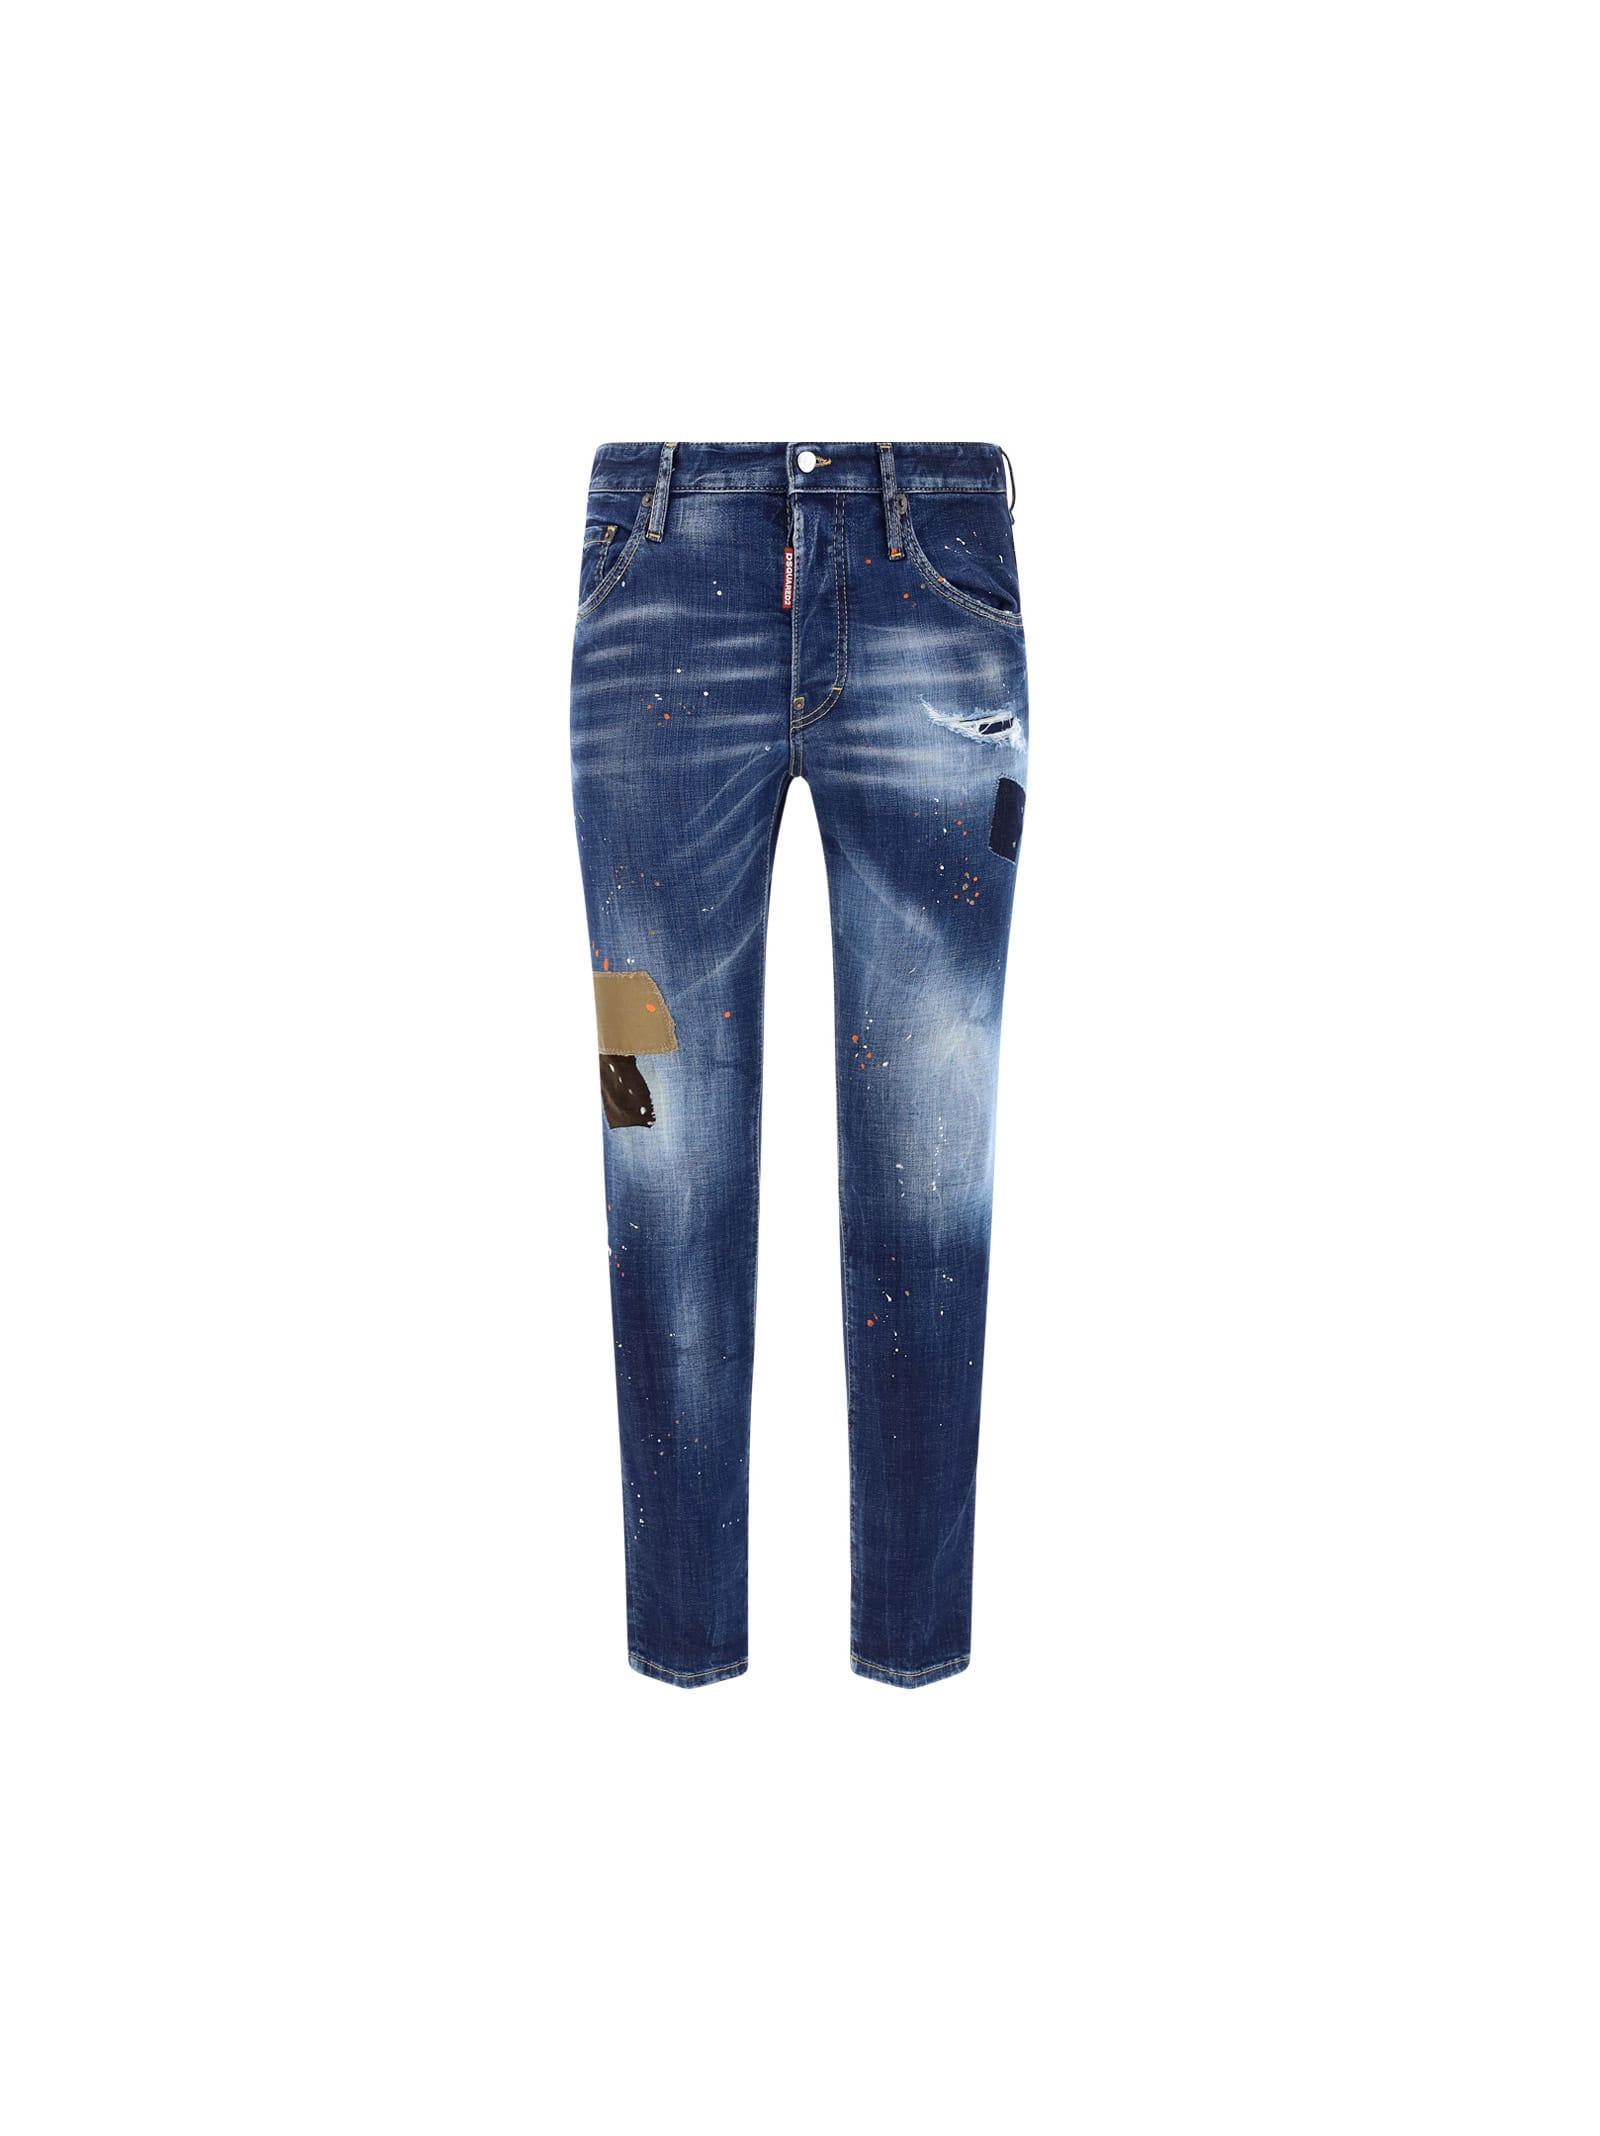 DSquared² Denim Jeans in Blue Navy (Blue) for Men - Save 54% | Lyst